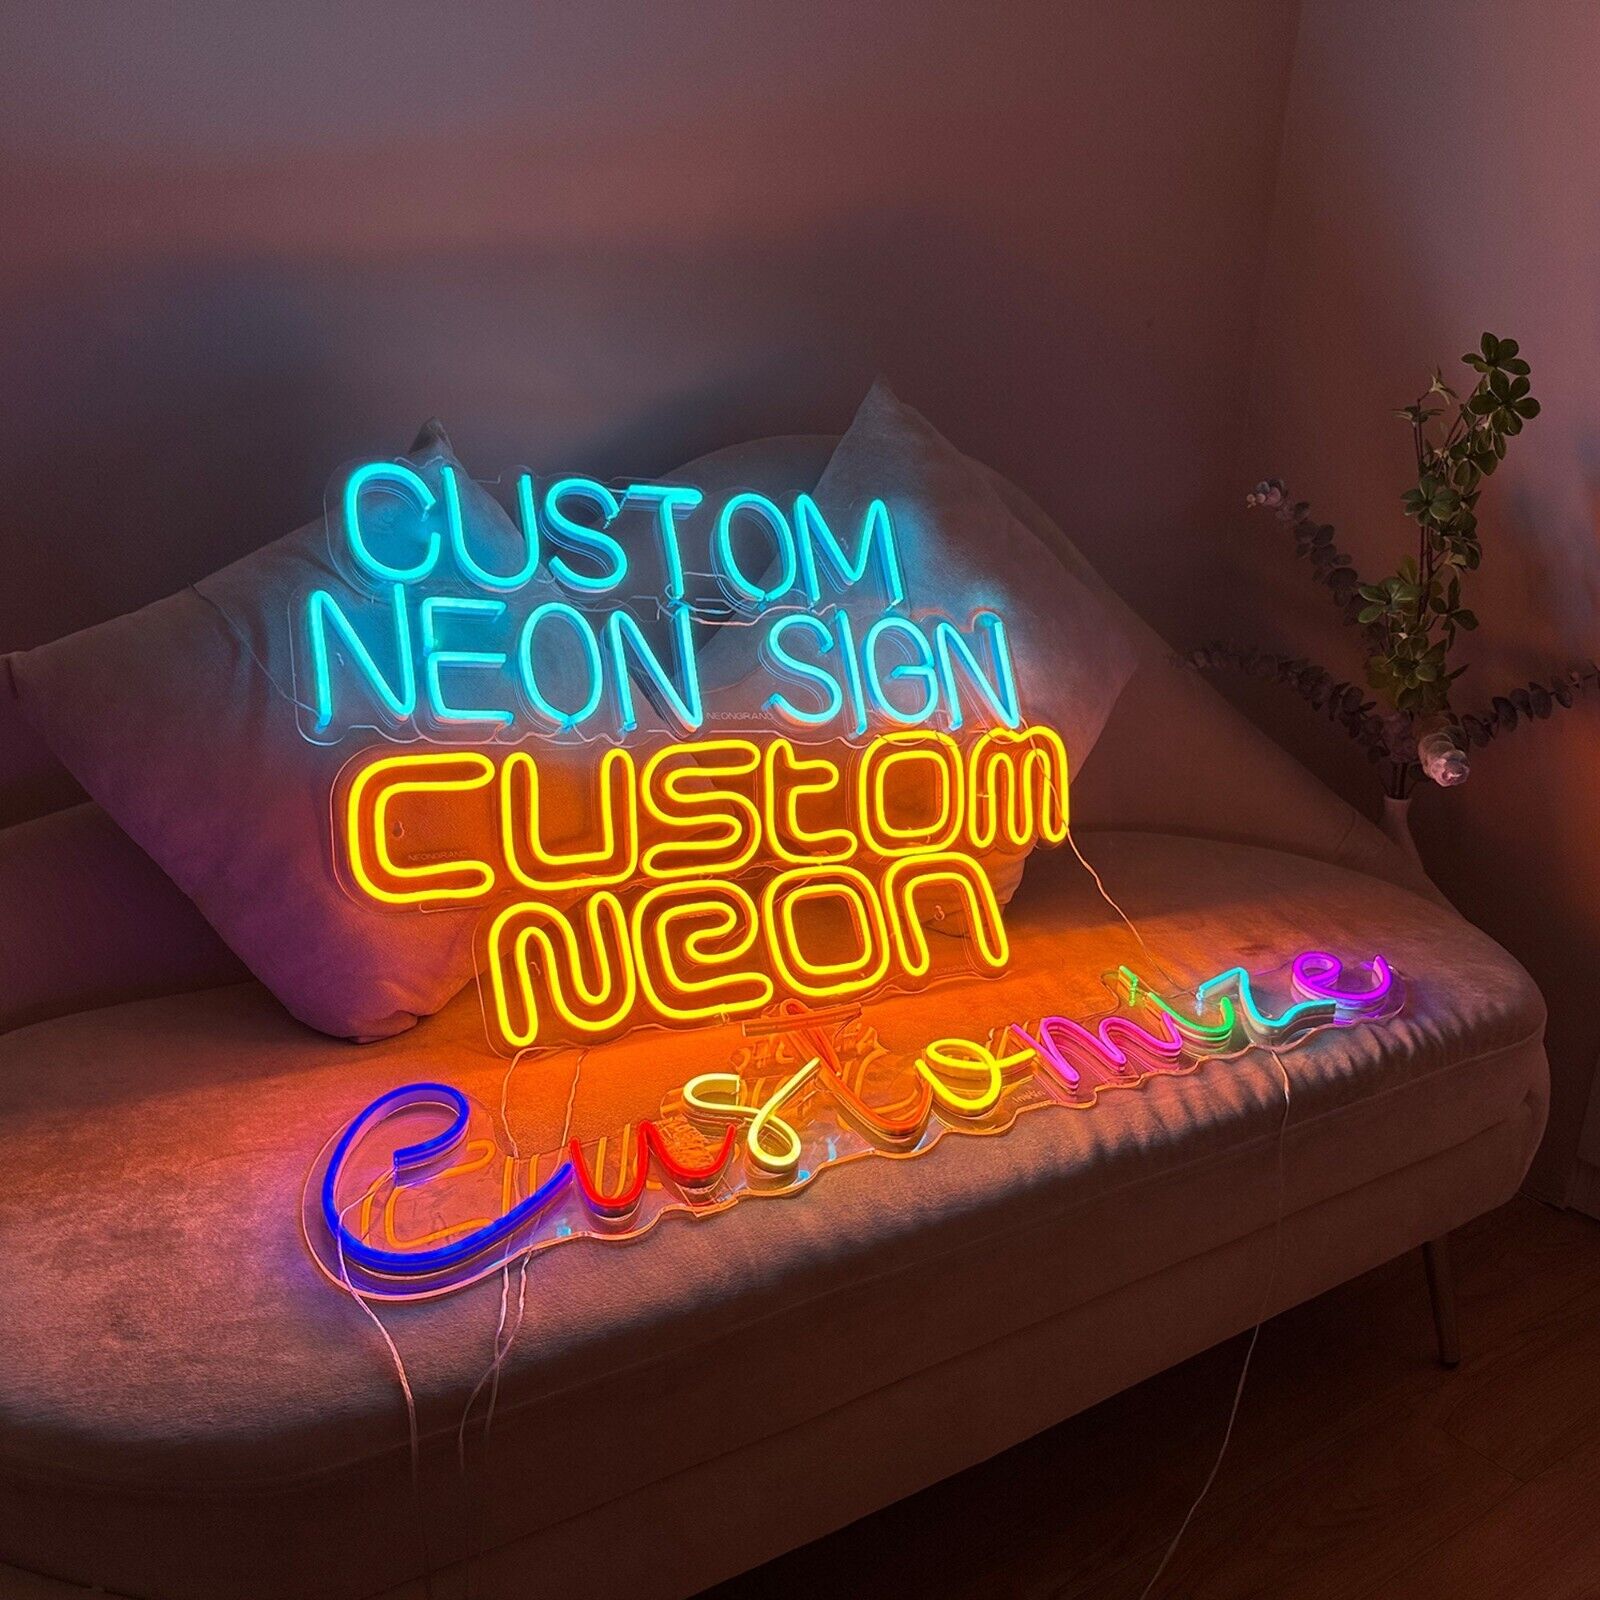 Personalized custom neon sign led custom led sign for Business logo acrylic made